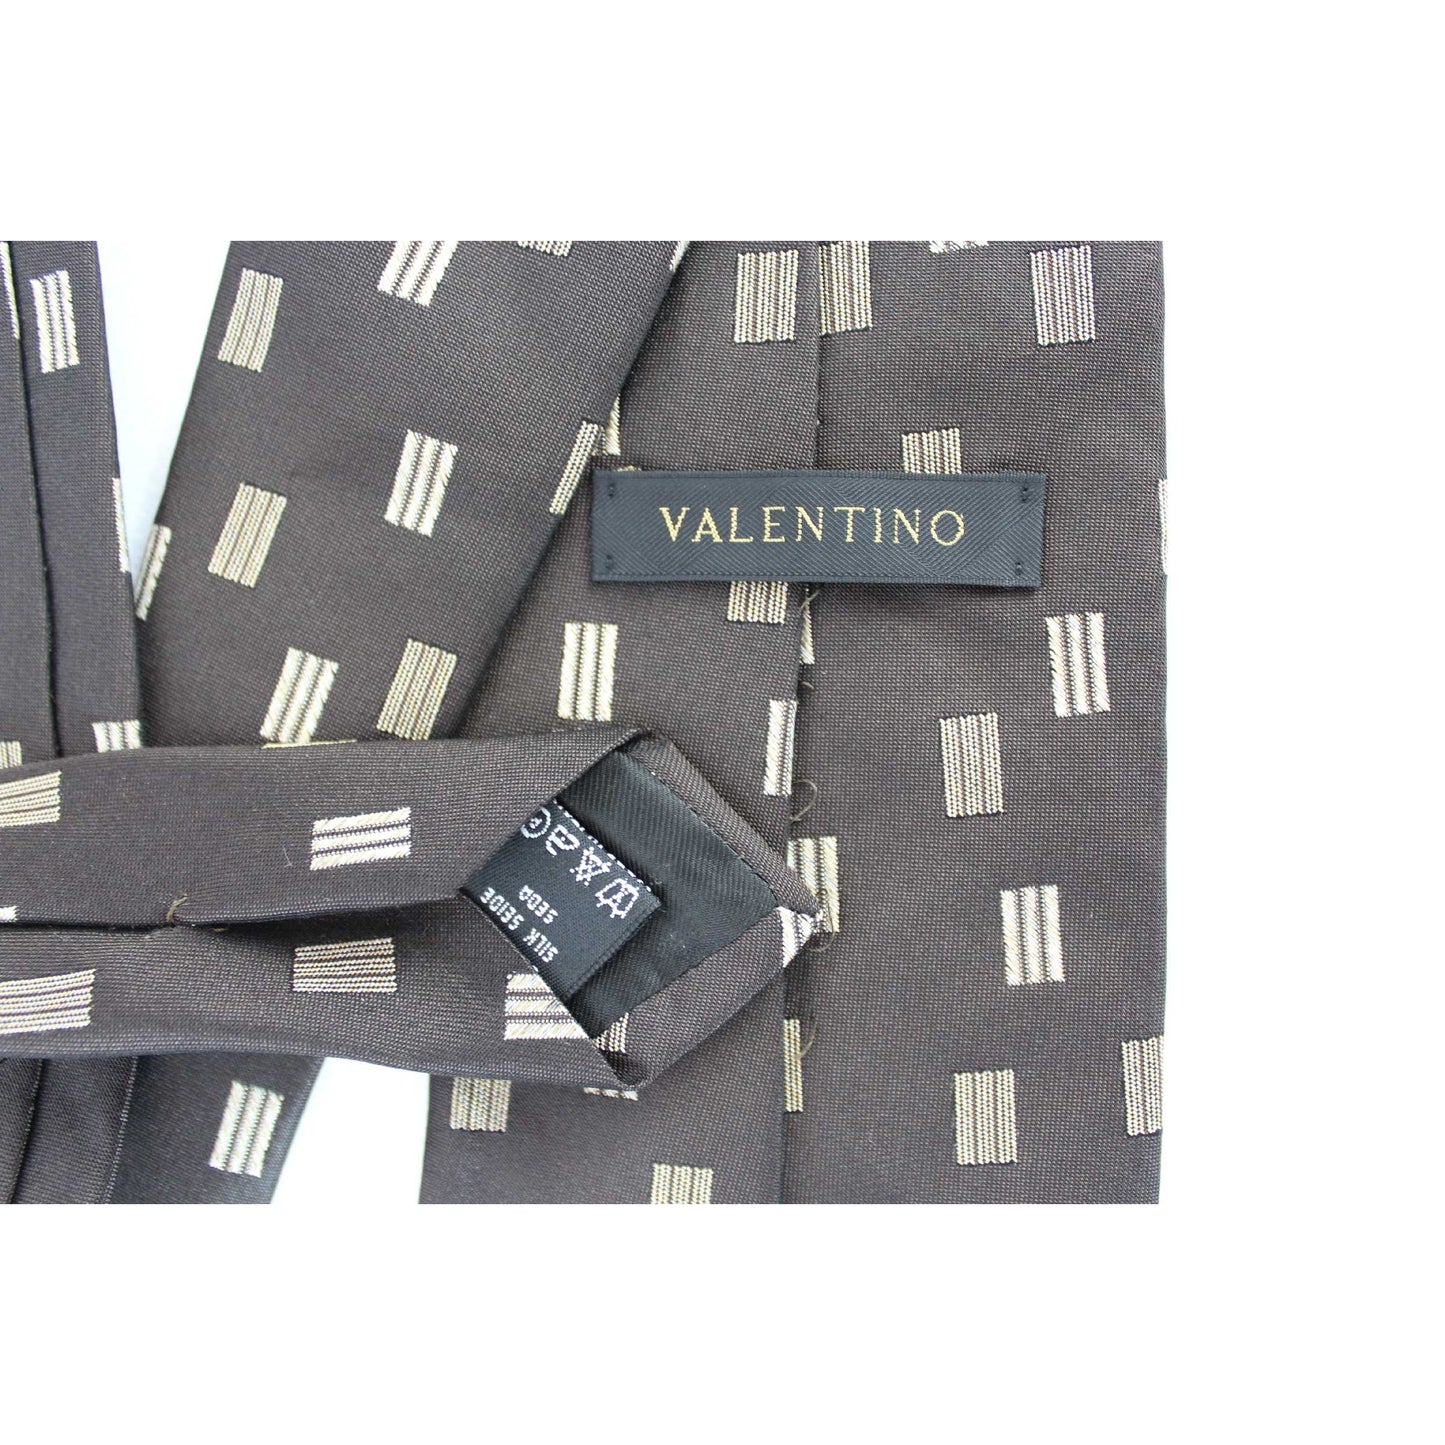 Valentino Cravatta Vintage Classica Seta Marrone Beige